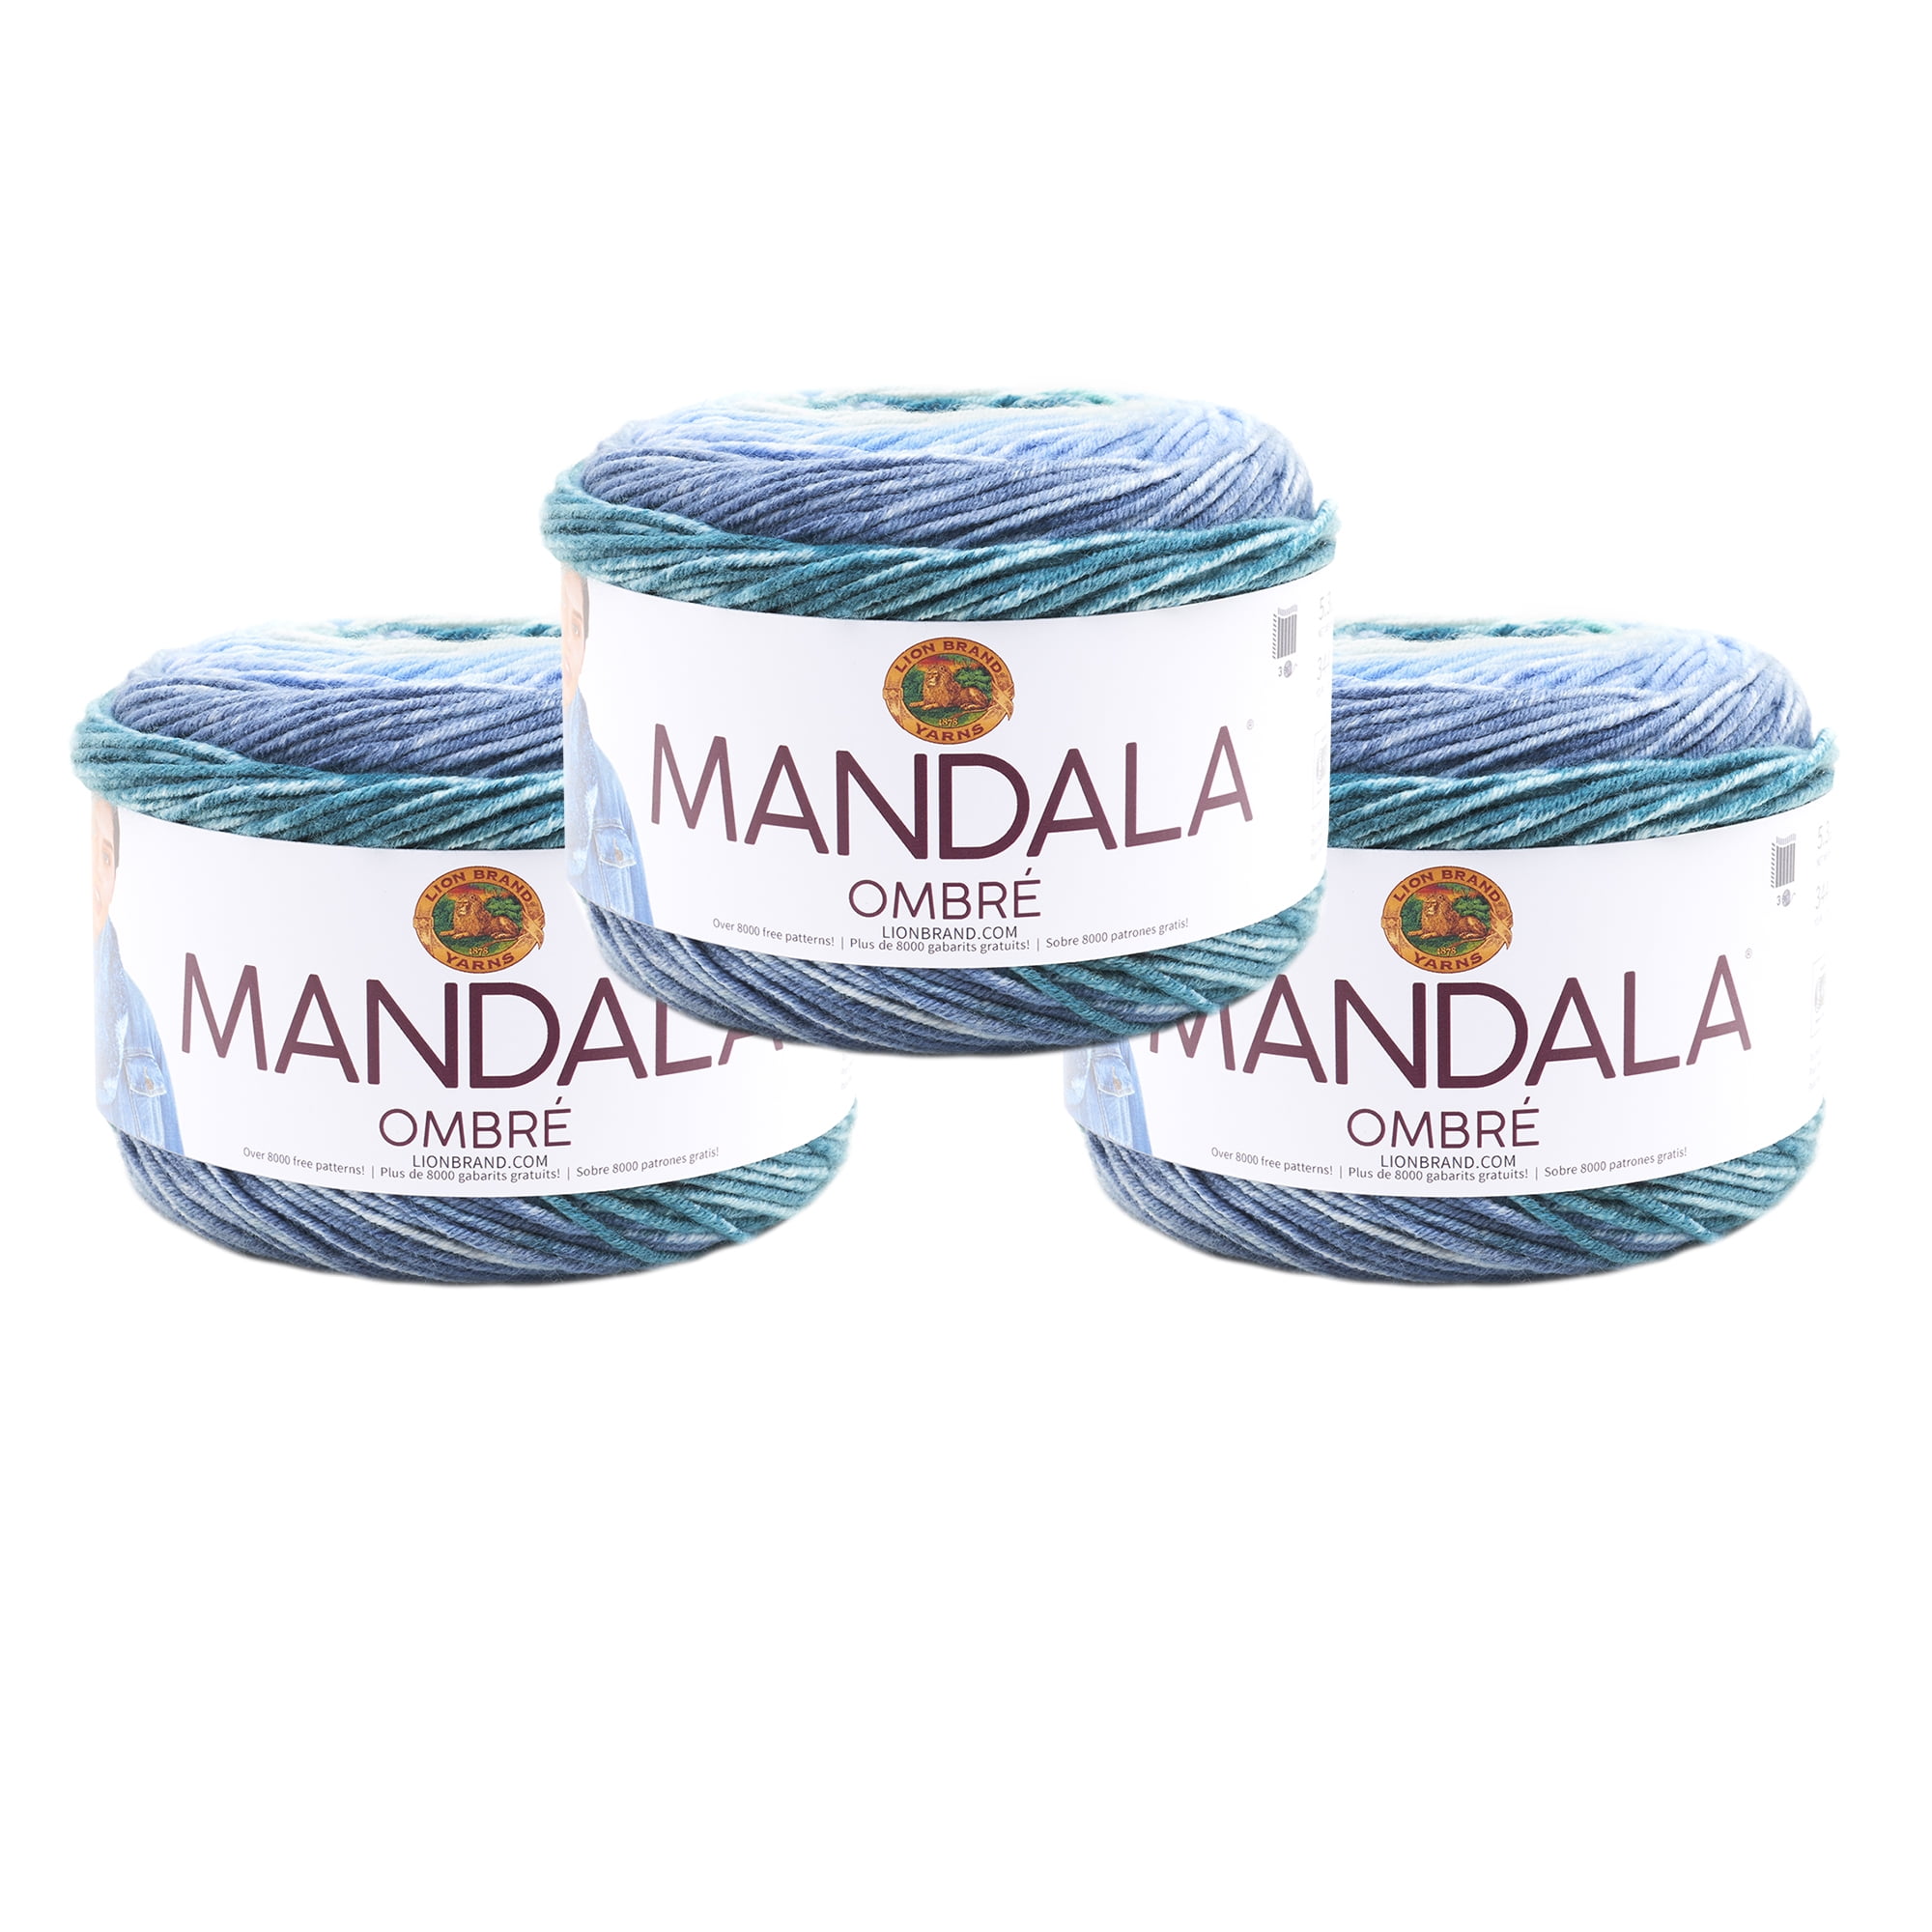 3 Pack) Lion Brand Yarn 551-206BL Mandala Ombre Yarn, Happy